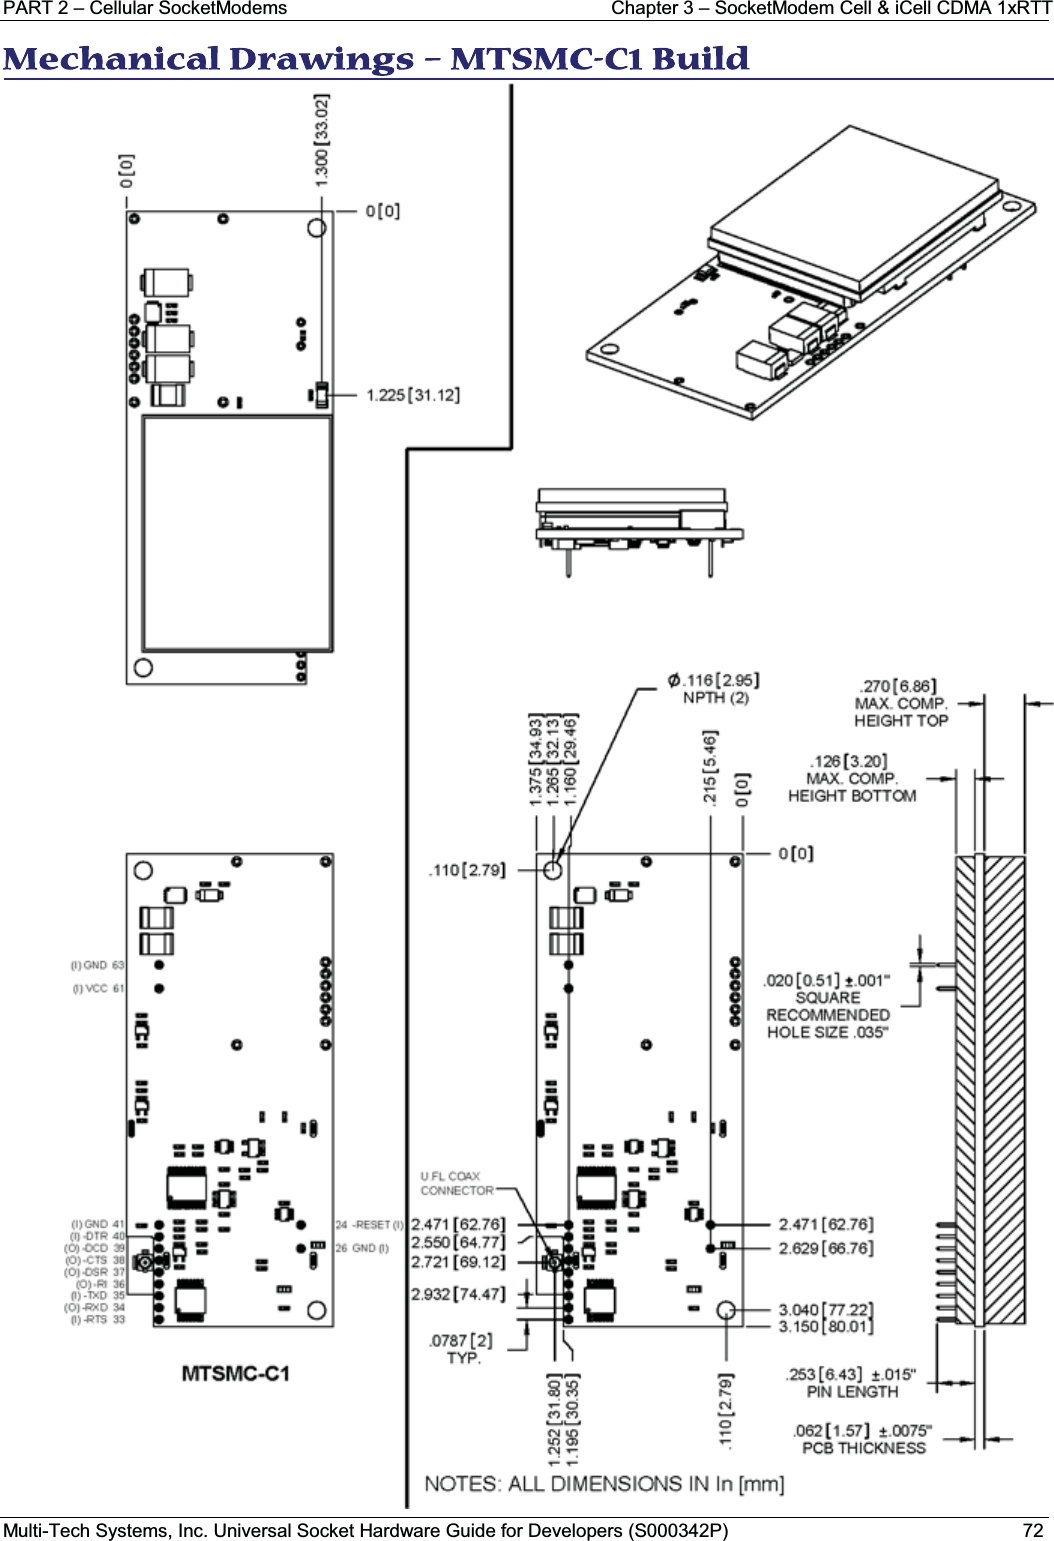 PART 2 – Cellular SocketModems Chapter 3 – SocketModem Cell &amp; iCell CDMA 1xRTT Multi-Tech Systems, Inc. Universal Socket Hardware Guide for Developers (S000342P) 72MMechanical Drawings – MTSMC-C1 Build  